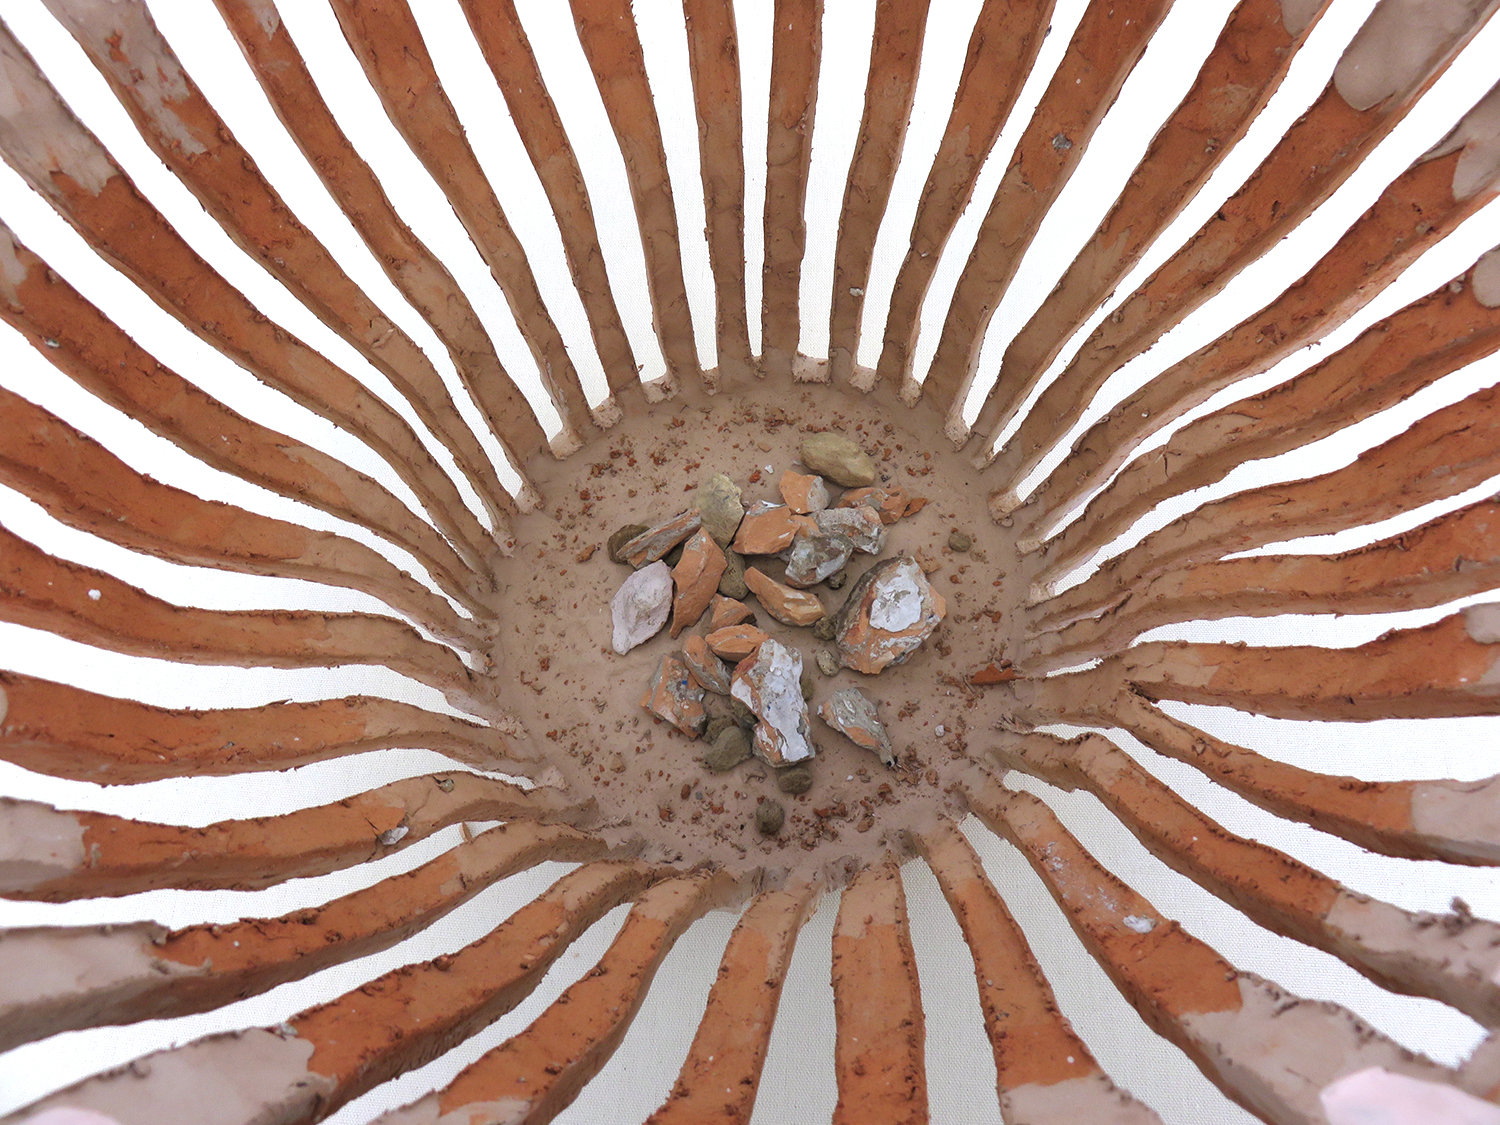   Wastebasket - detail  Ceramic waste 16” x 18” x 16” 